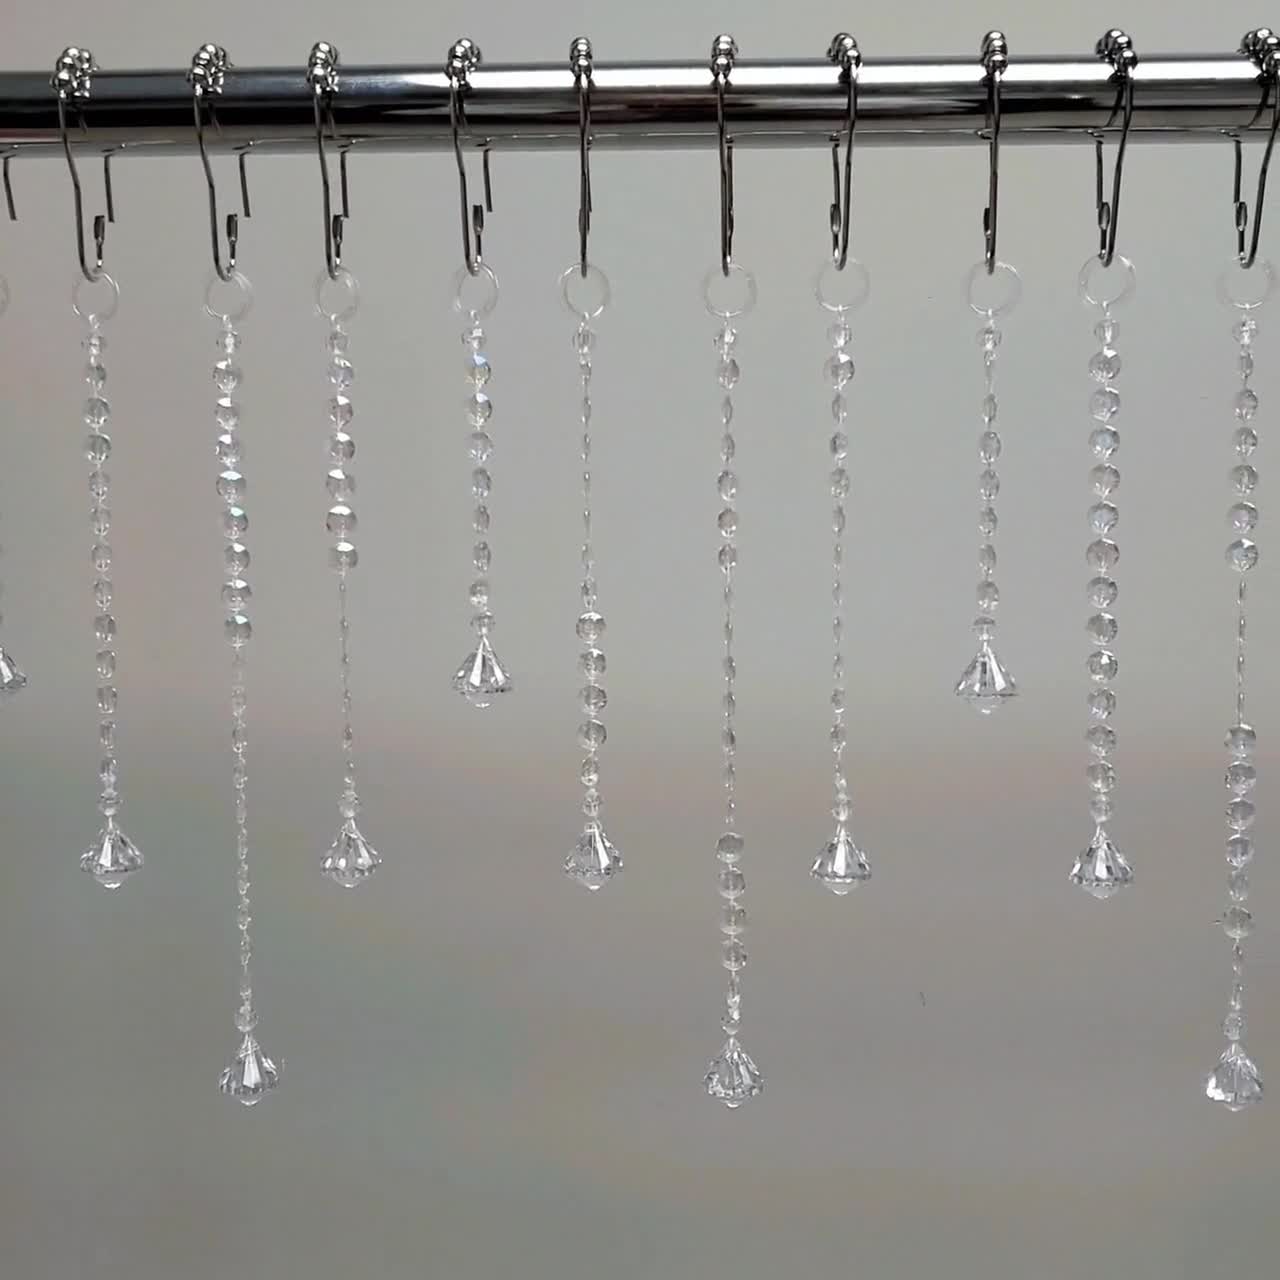 SchSin 12pcs Shower Curtain Hooks Acrylic Crystal Shower Curtain Rings  Round Diamond Decorative Curtain